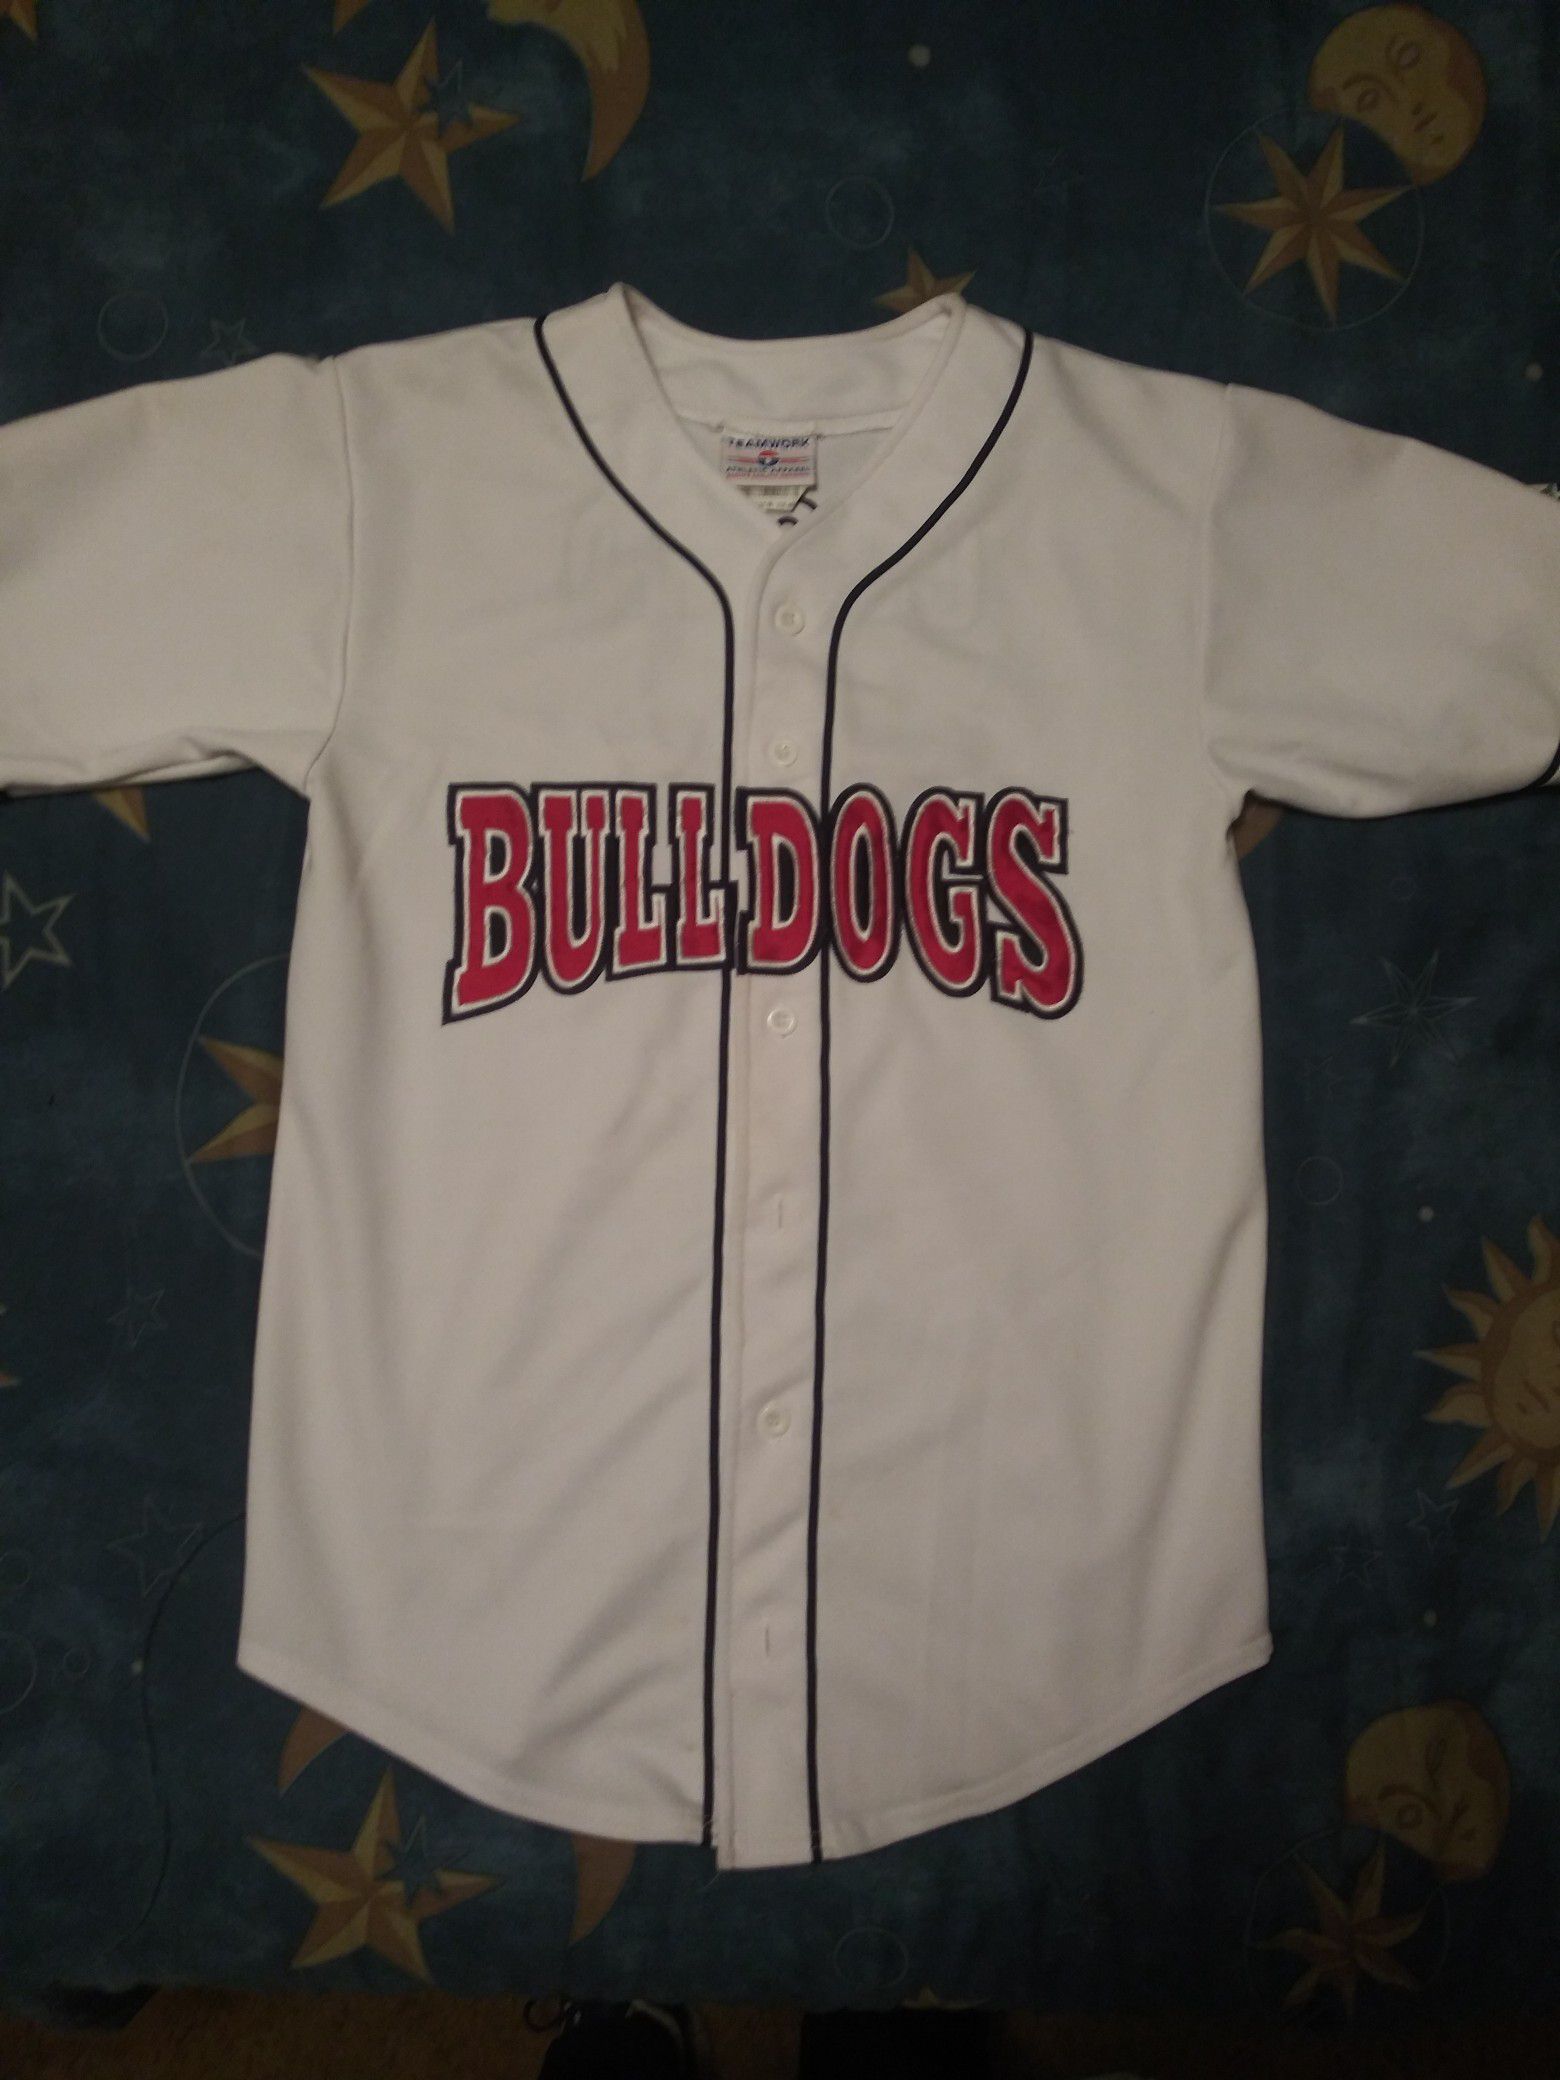 Bulldogs Baseball jersey. Stitched lettering